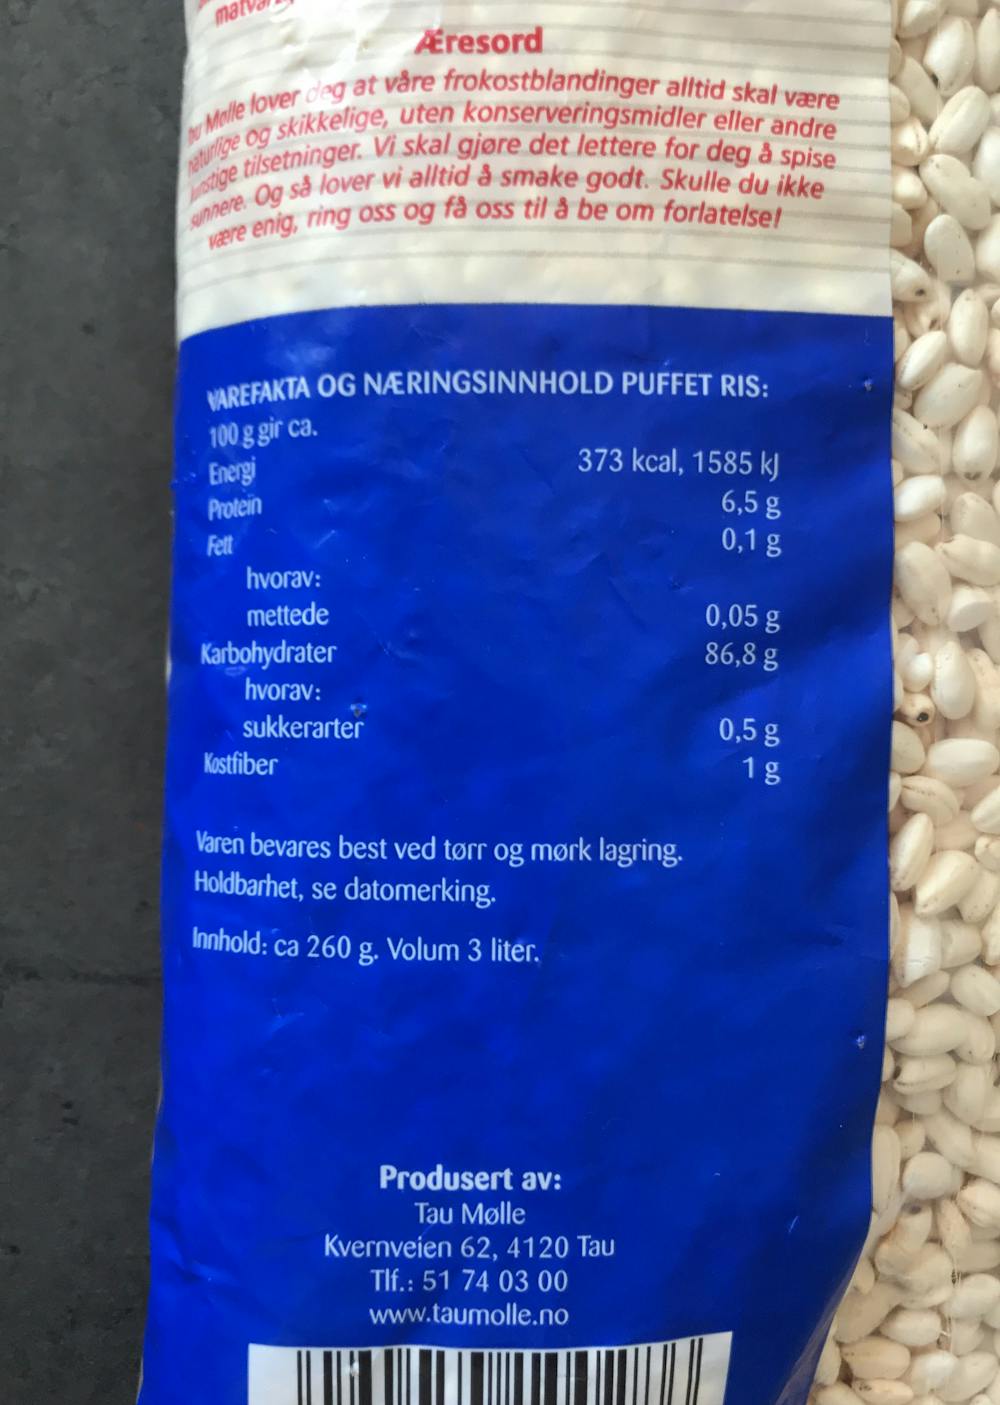 Ingredienslisten til Tau Mølle Puffet ris